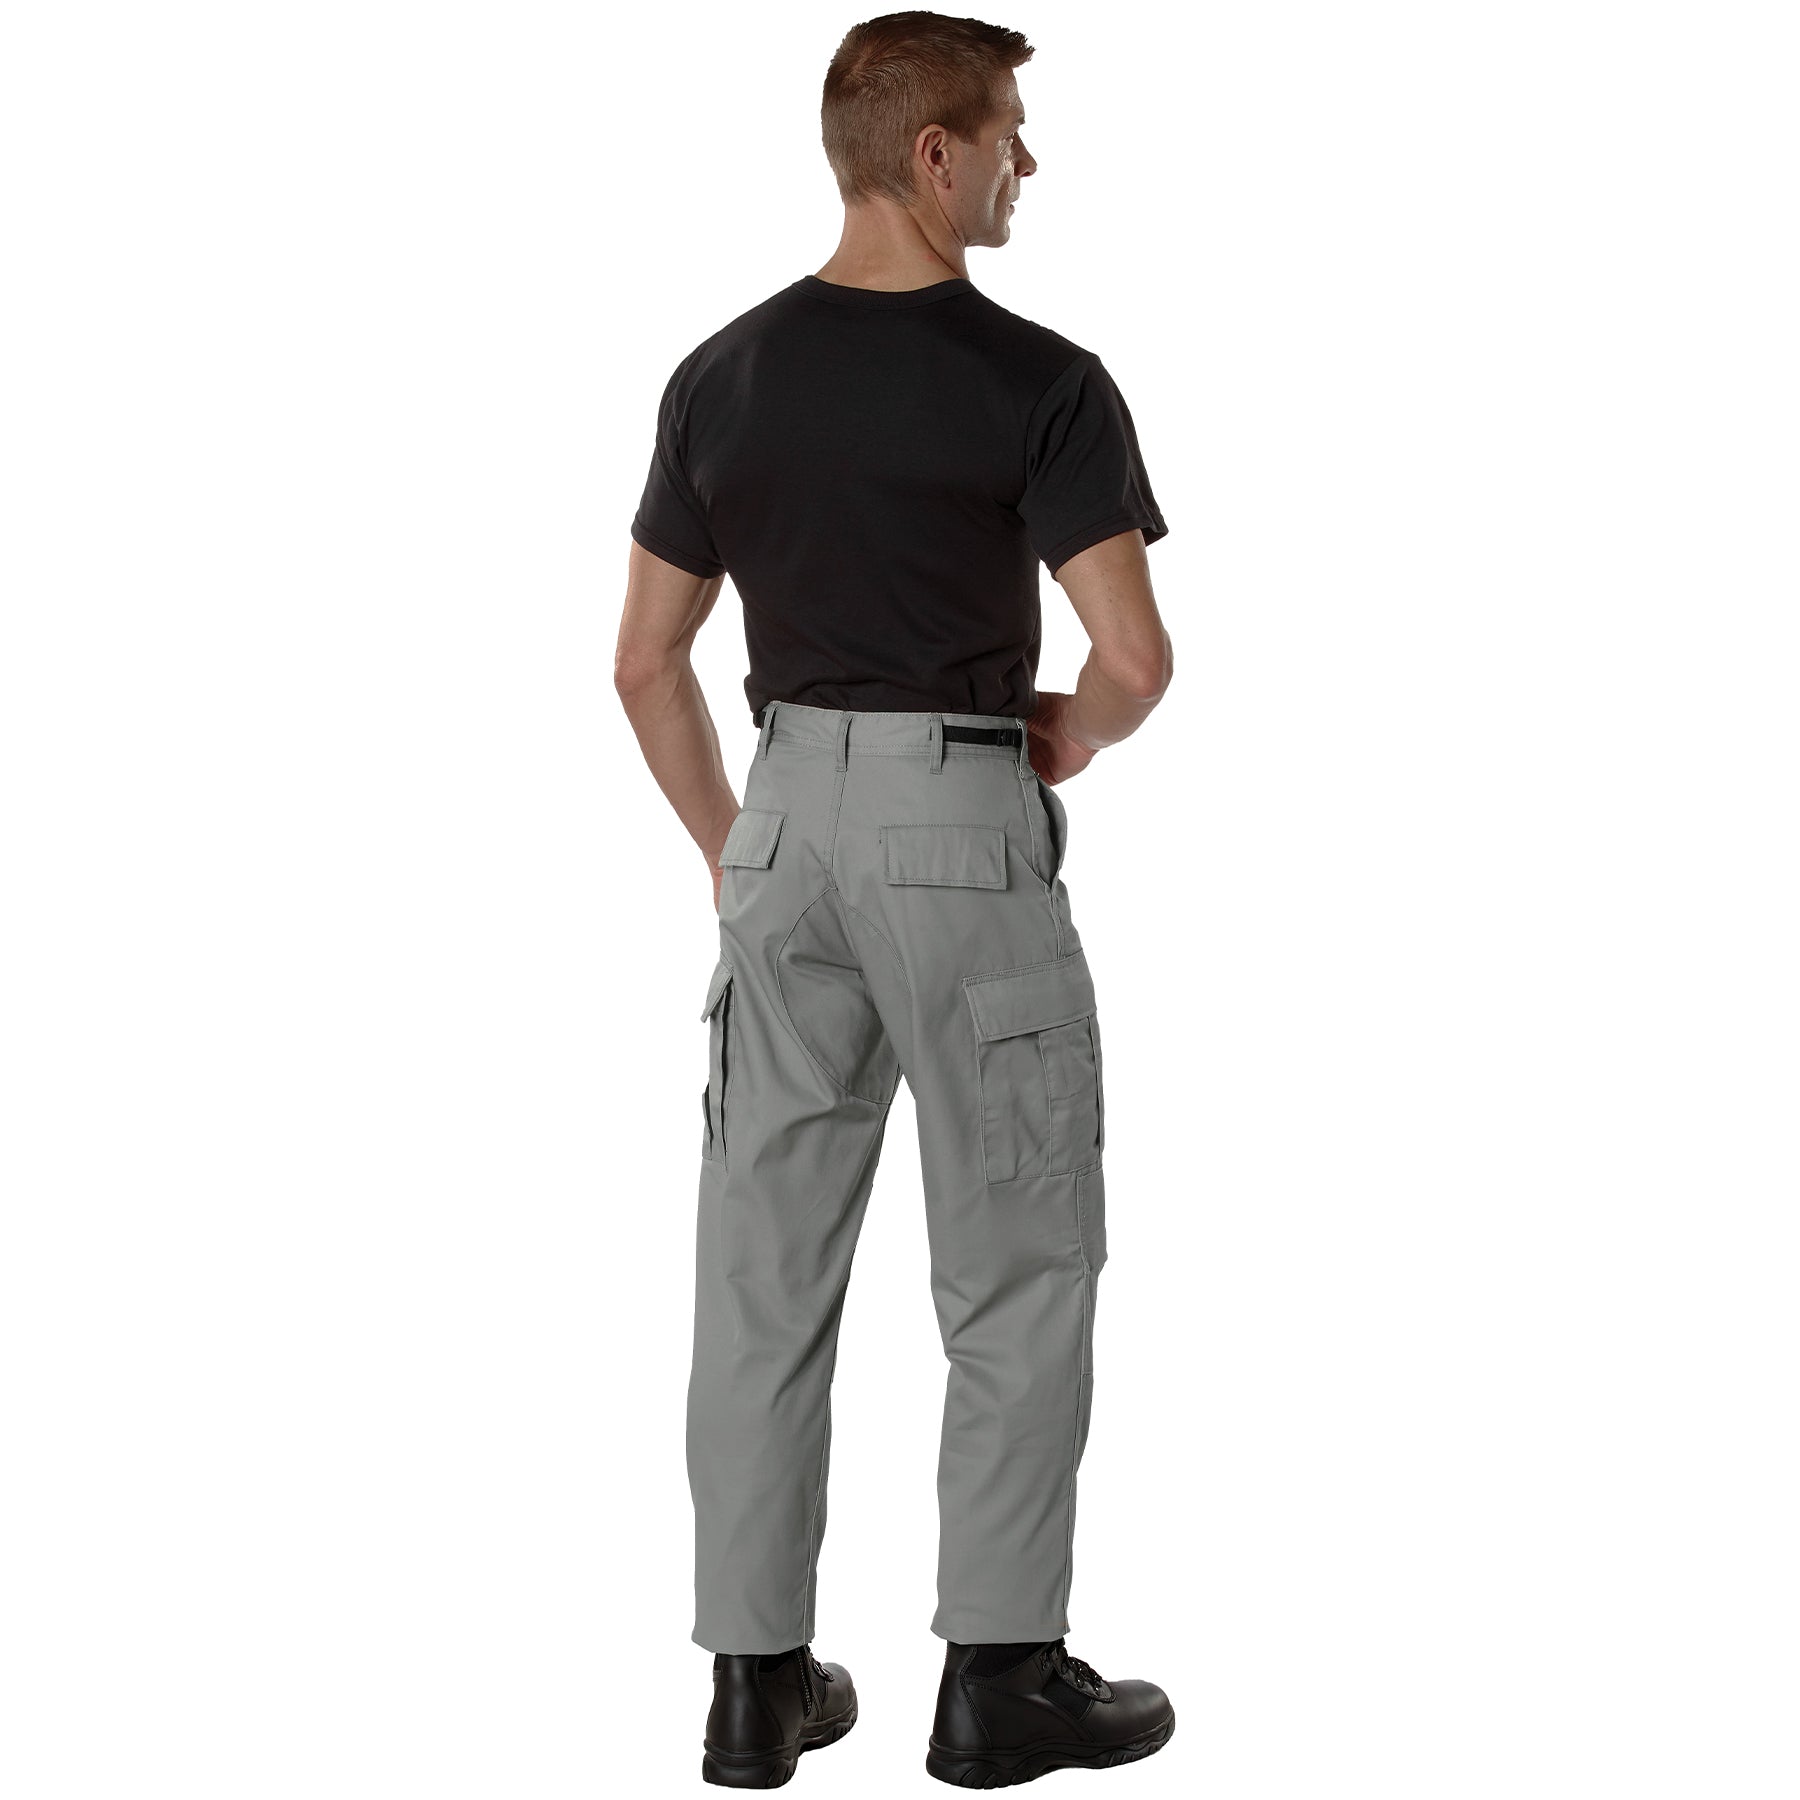 Poly/Cotton Tactical BDU Pants